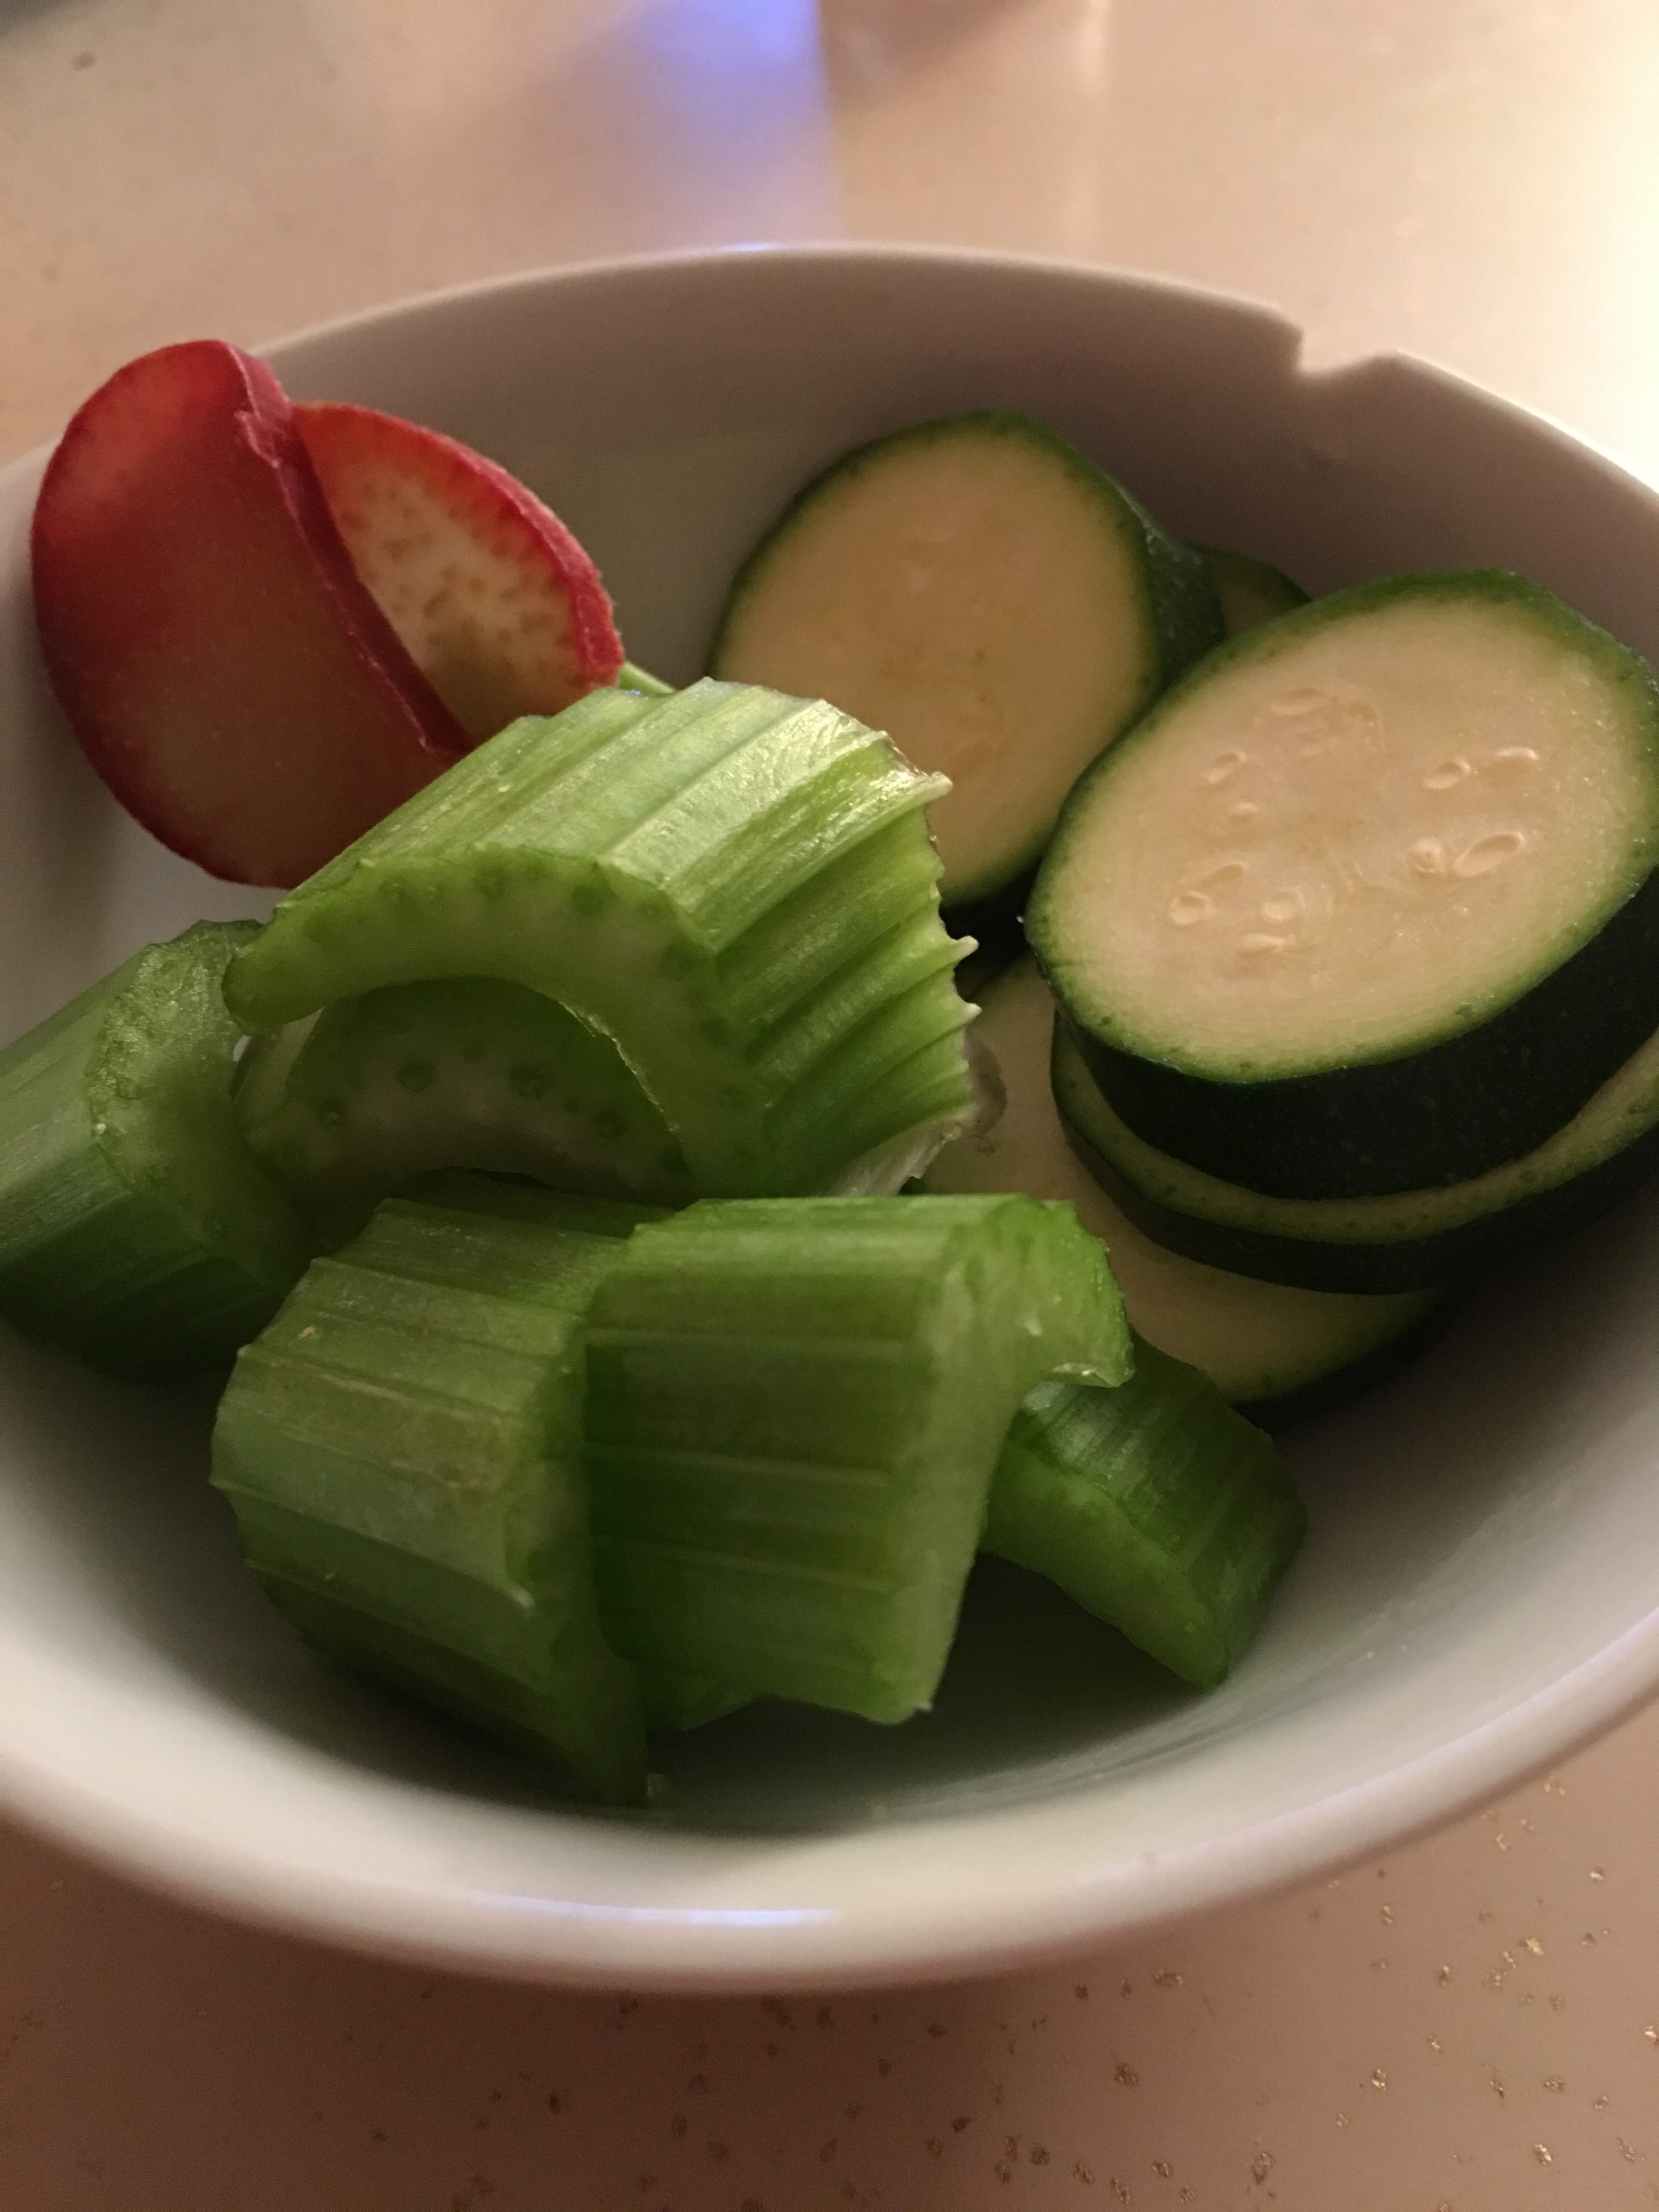 A GREAT Night-time Snack: Green Celery, Zucchini, Rhubarb